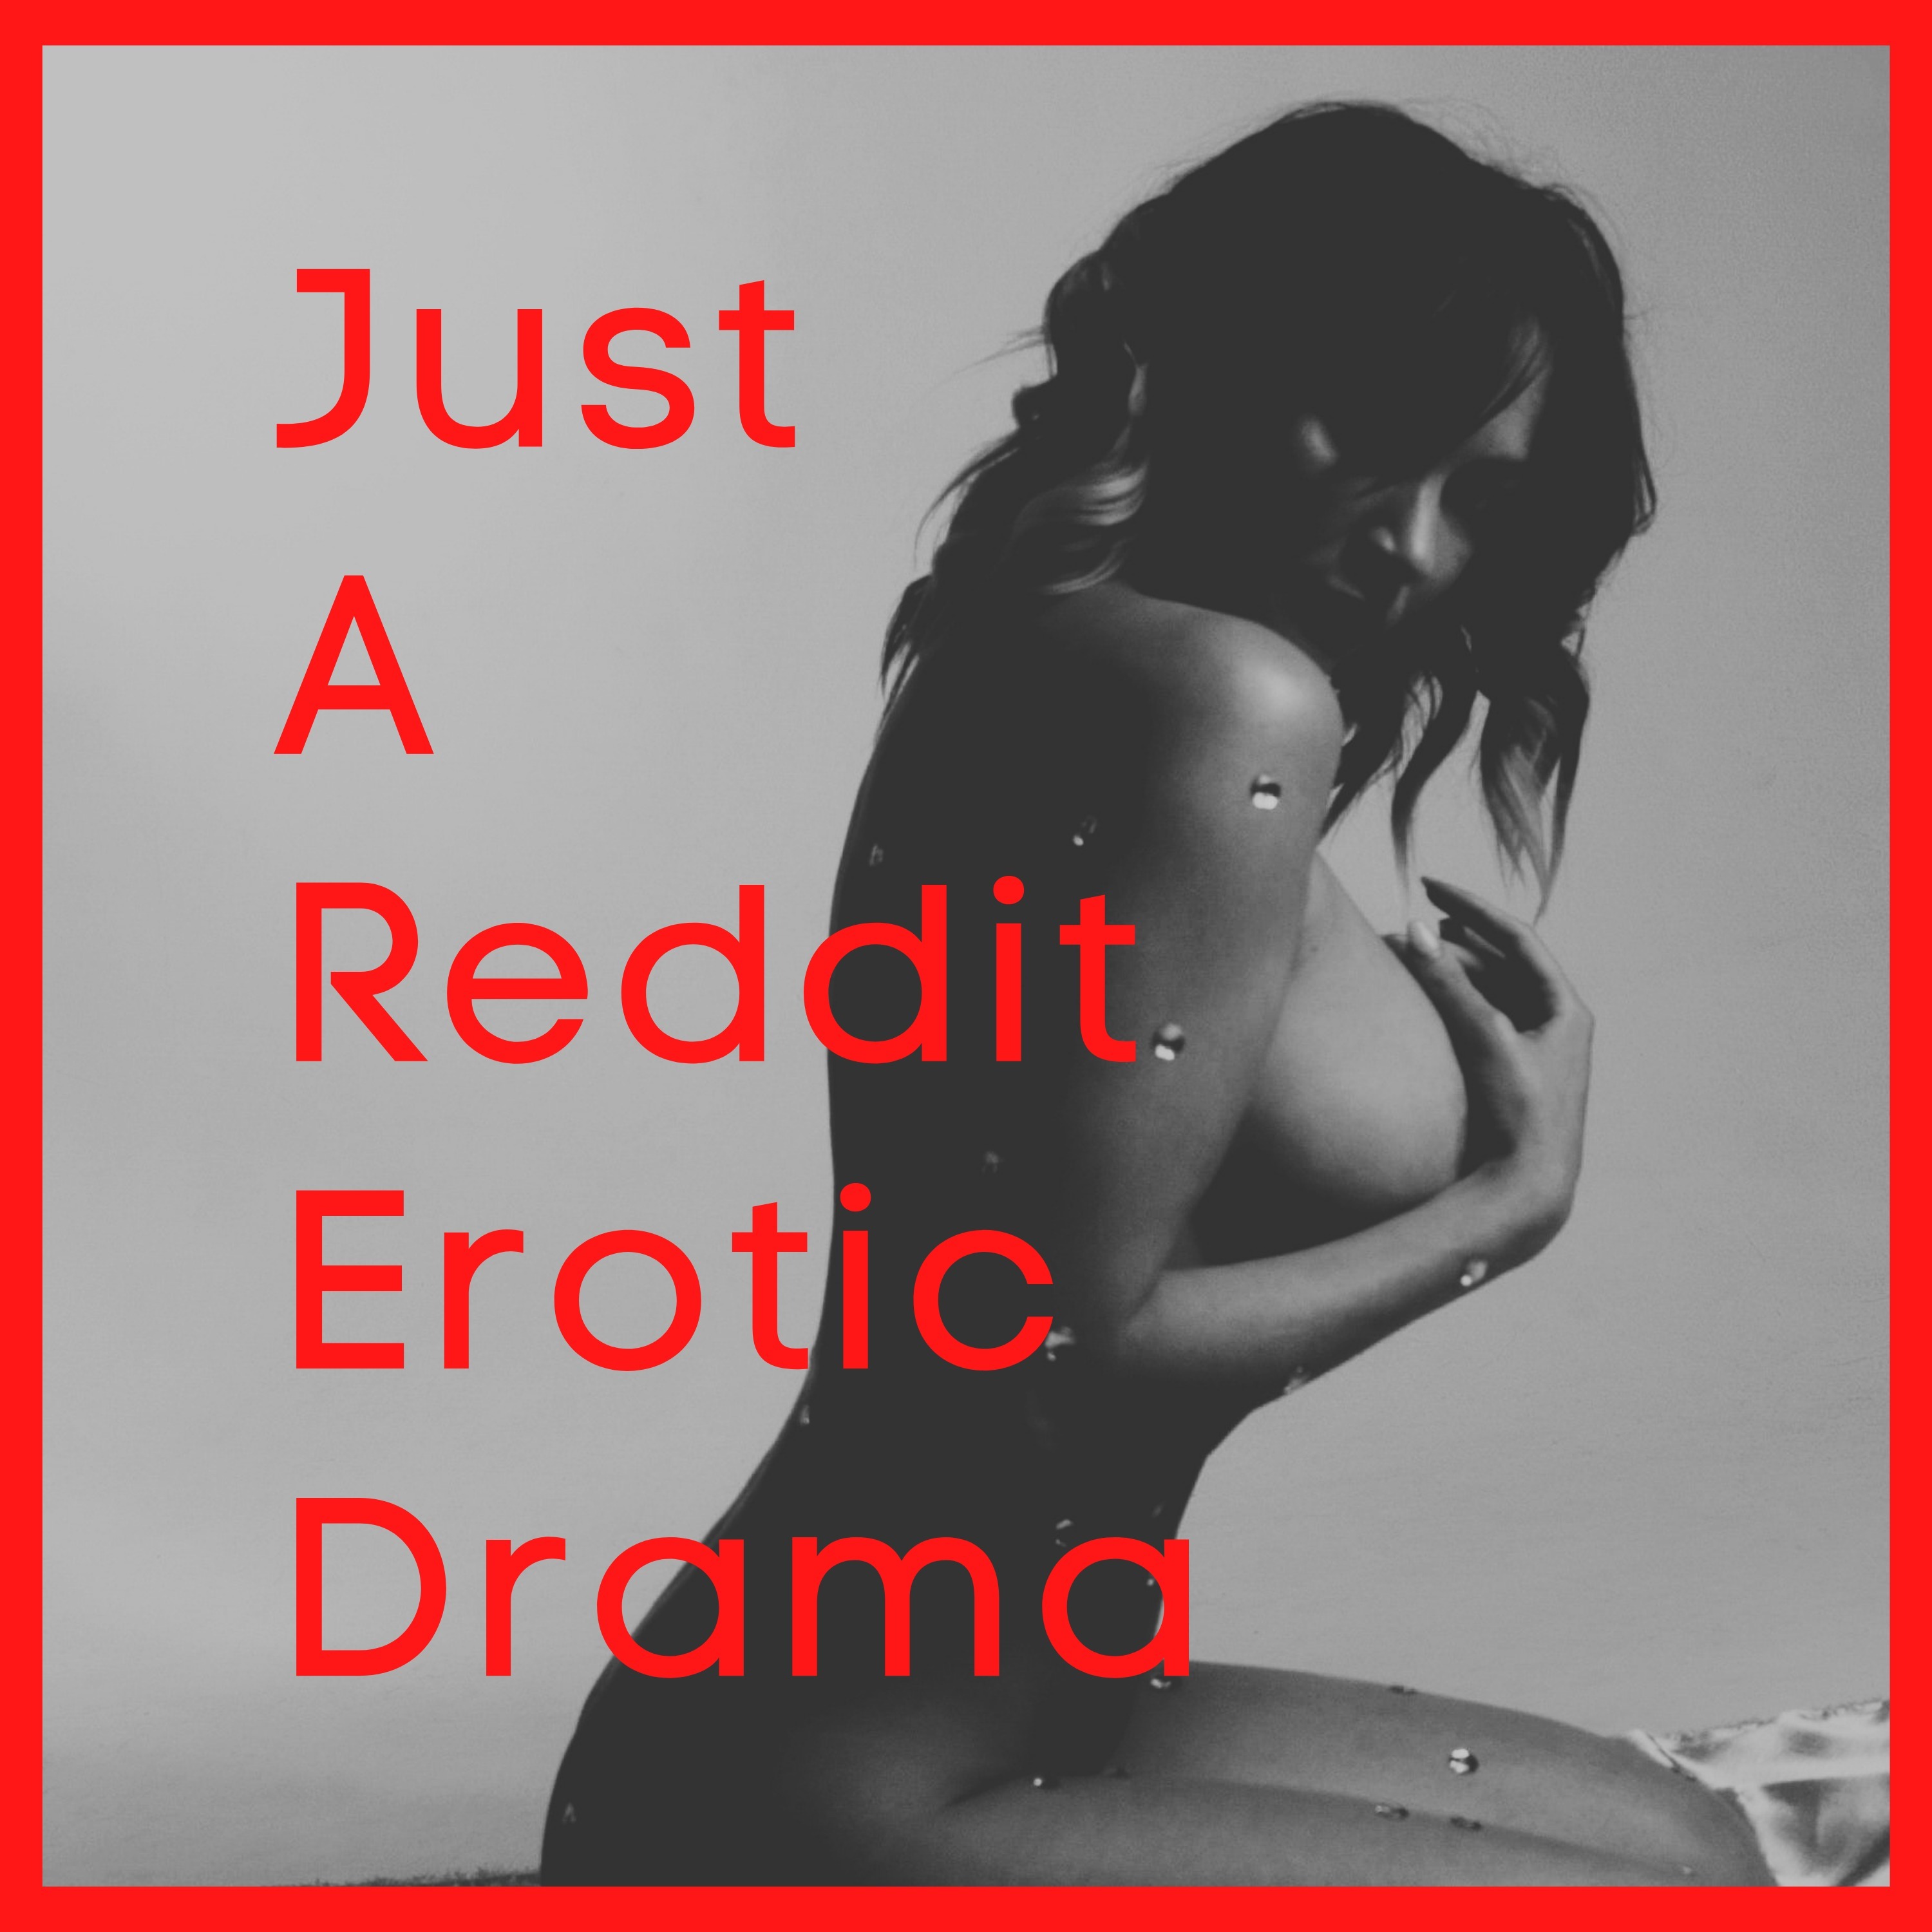 Erotic hypnosis reddit